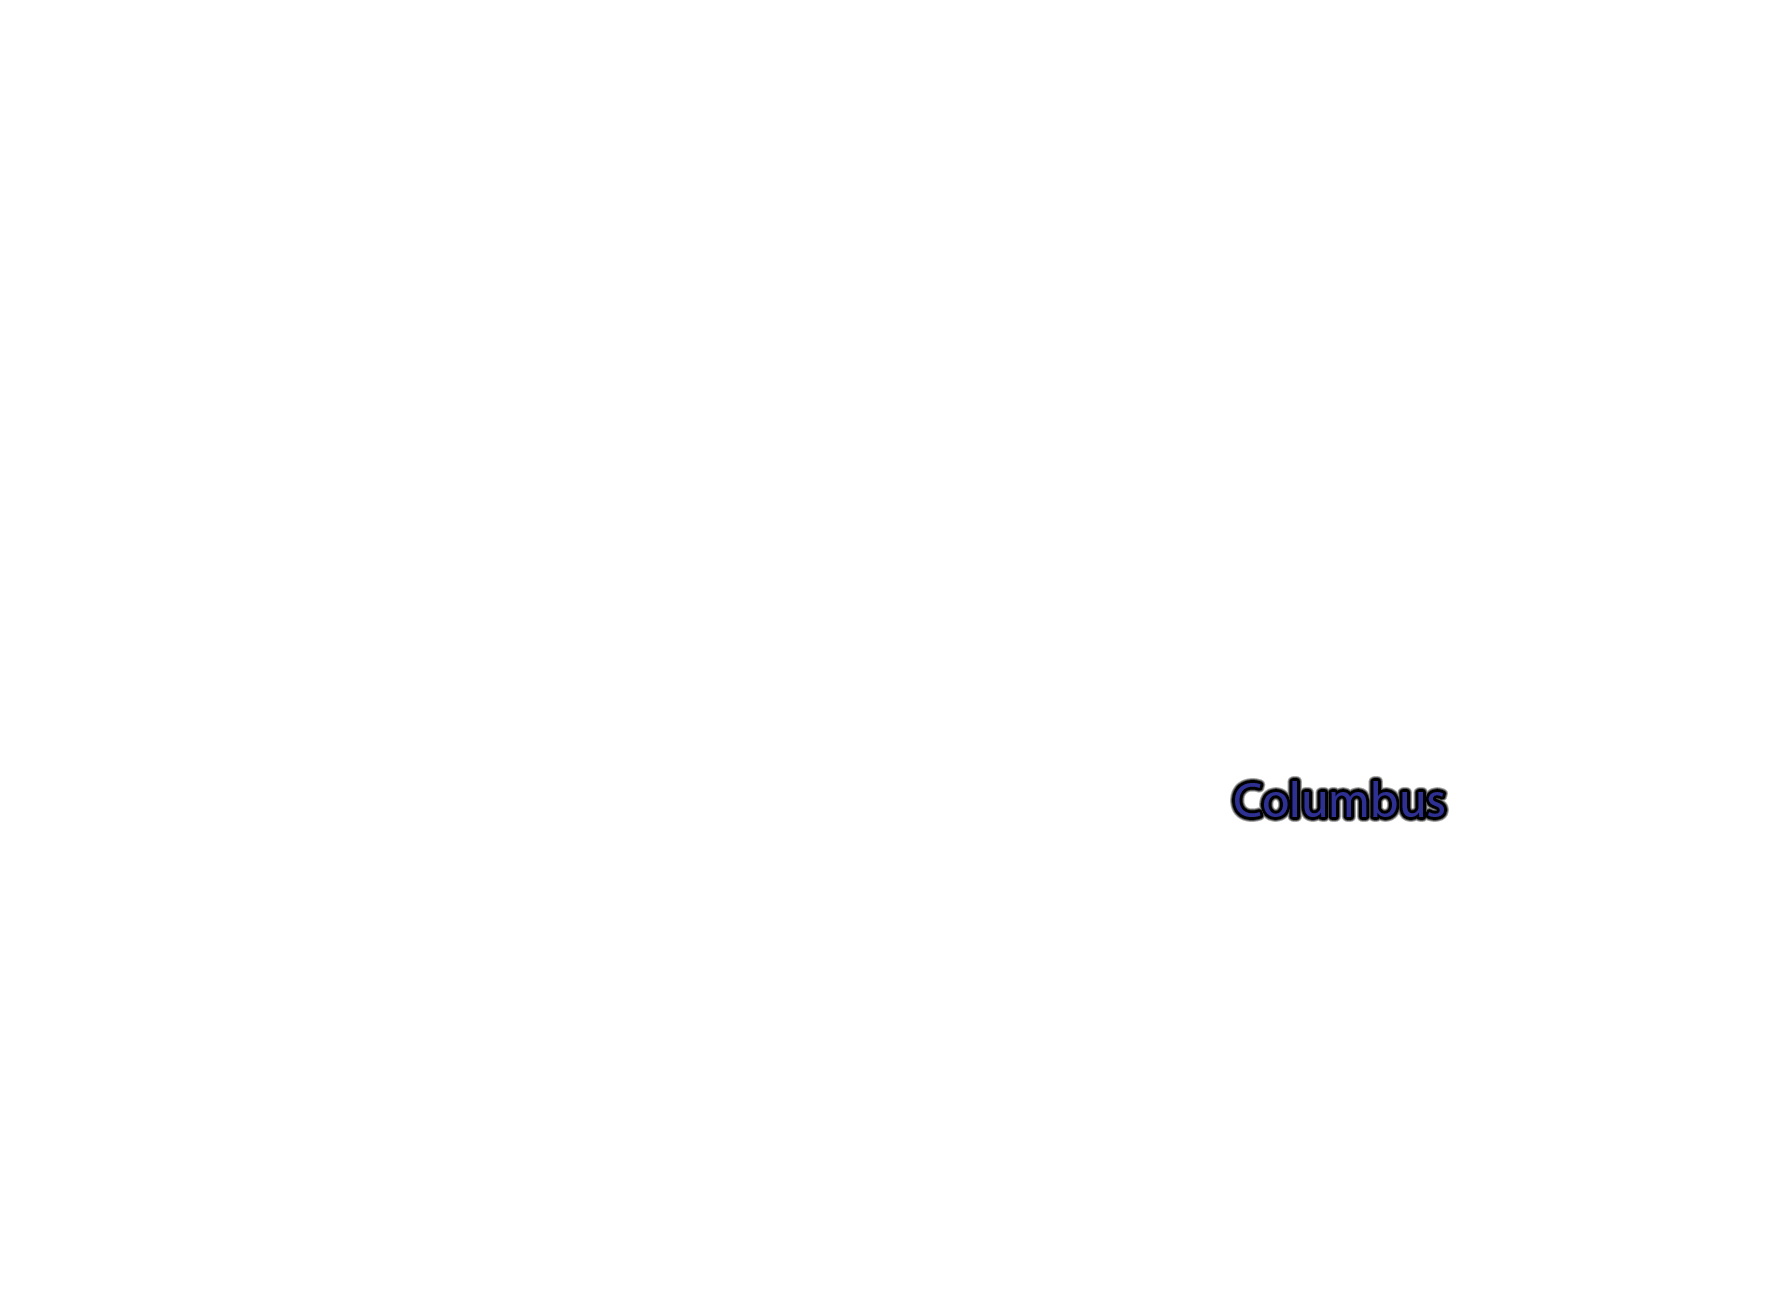 Columbus label with glow